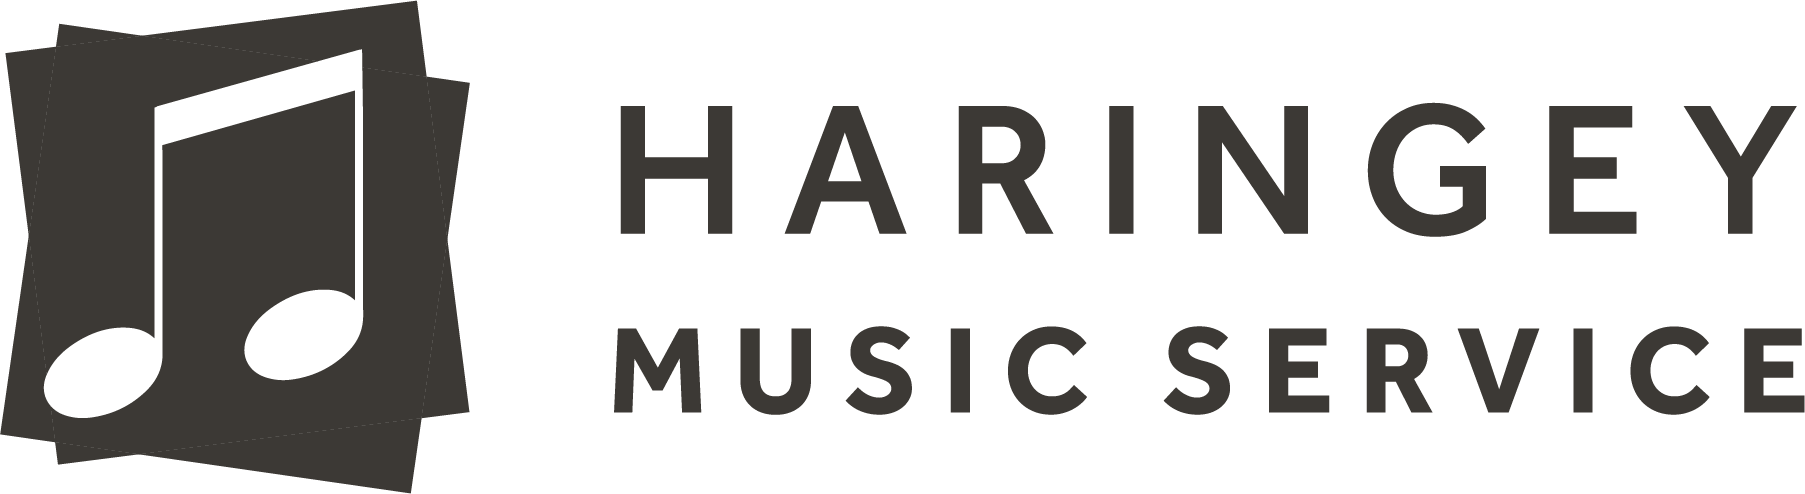 Haringey Music Service logo black.png